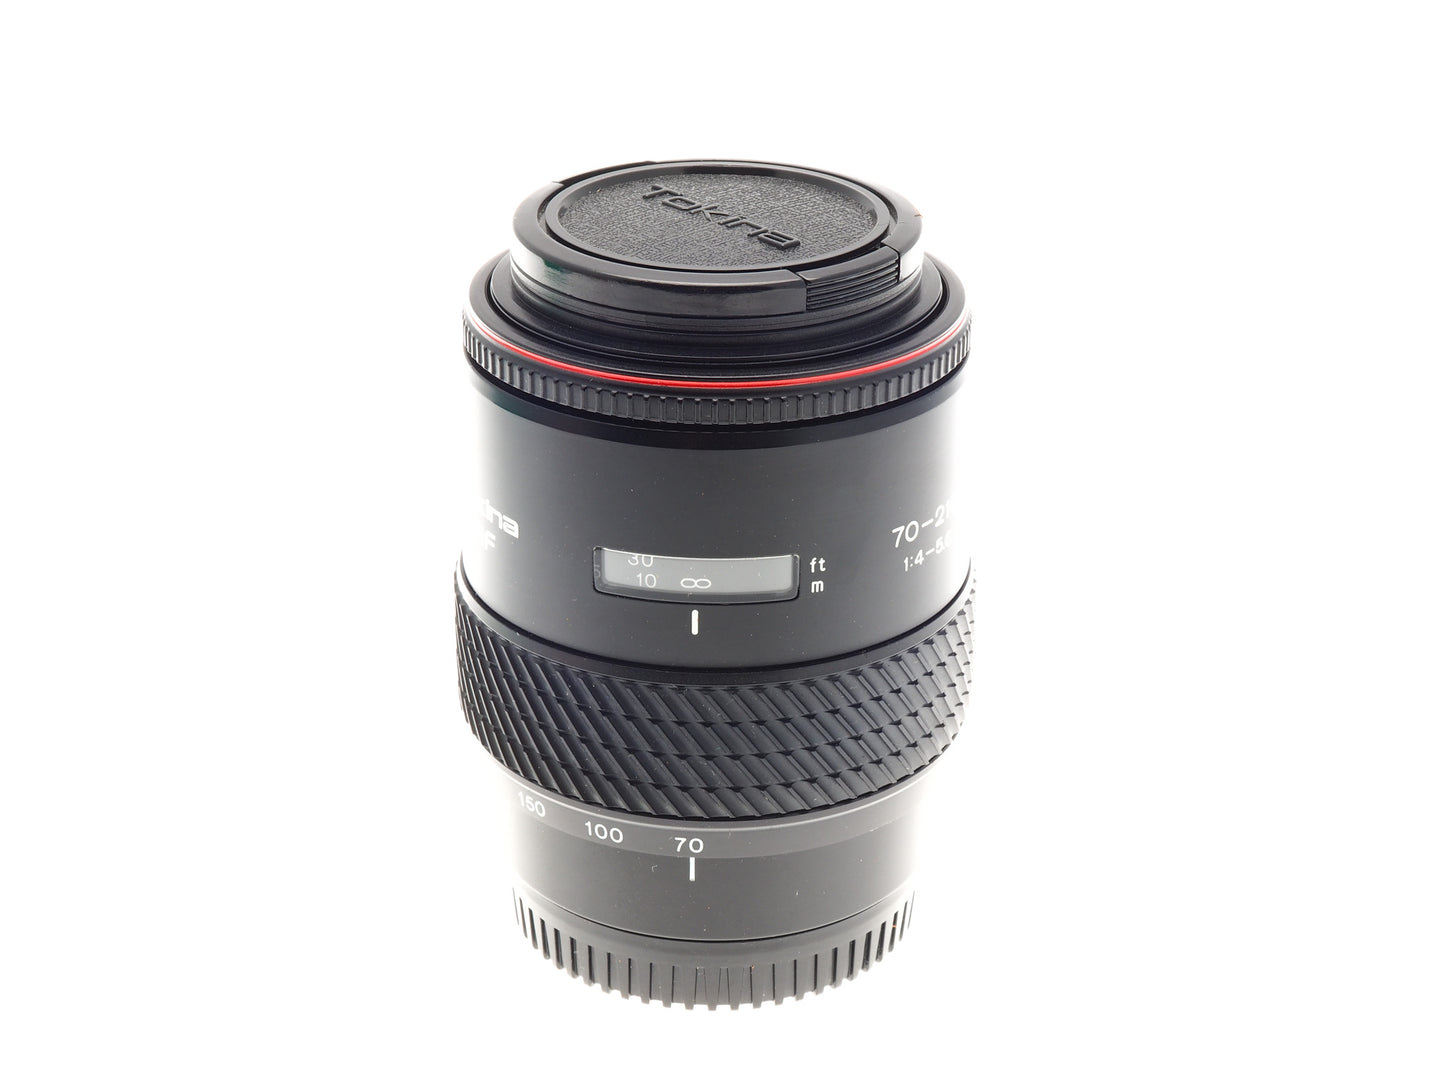 Tokina 70-210mm f4-5.6 SD - Lens